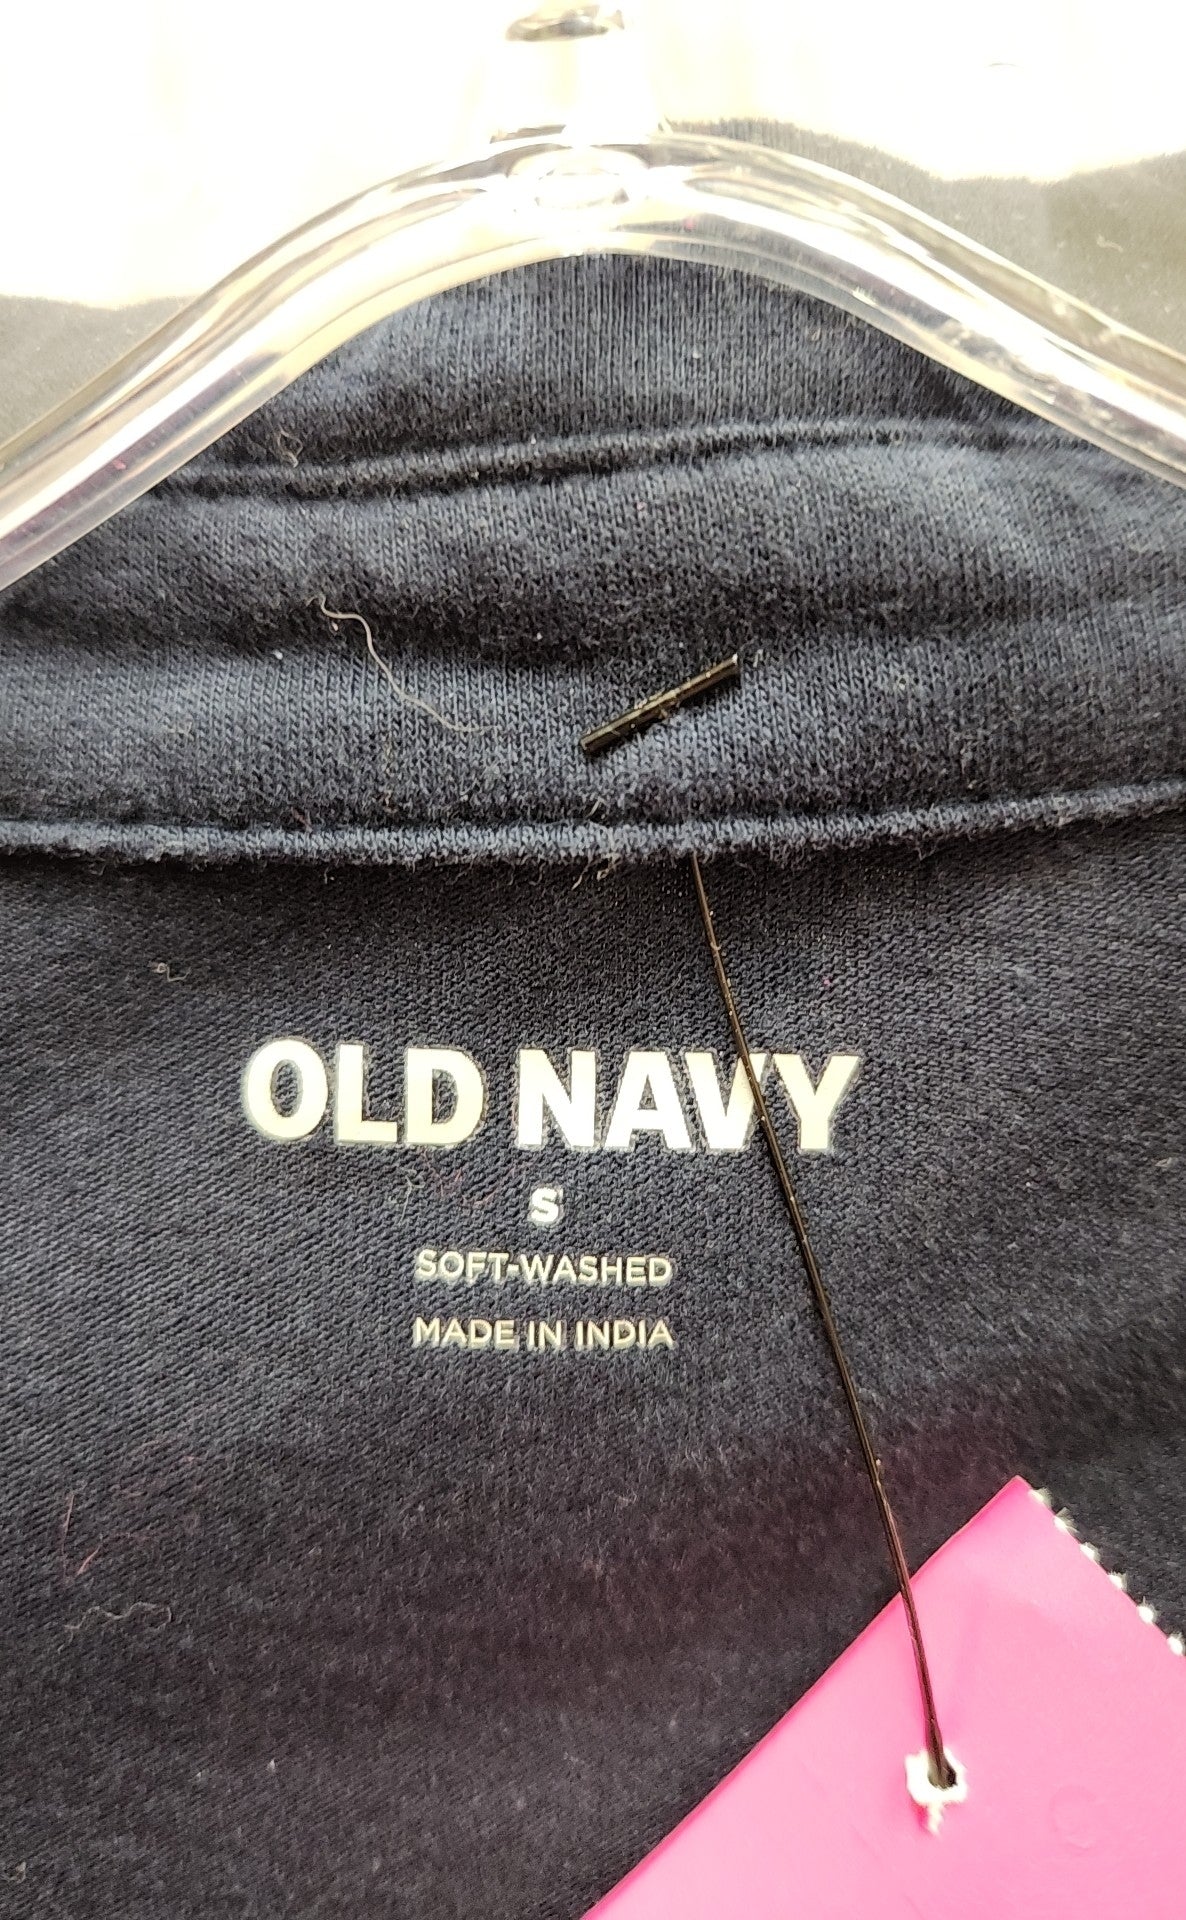 Old Navy Men's Size S Navy Shirt